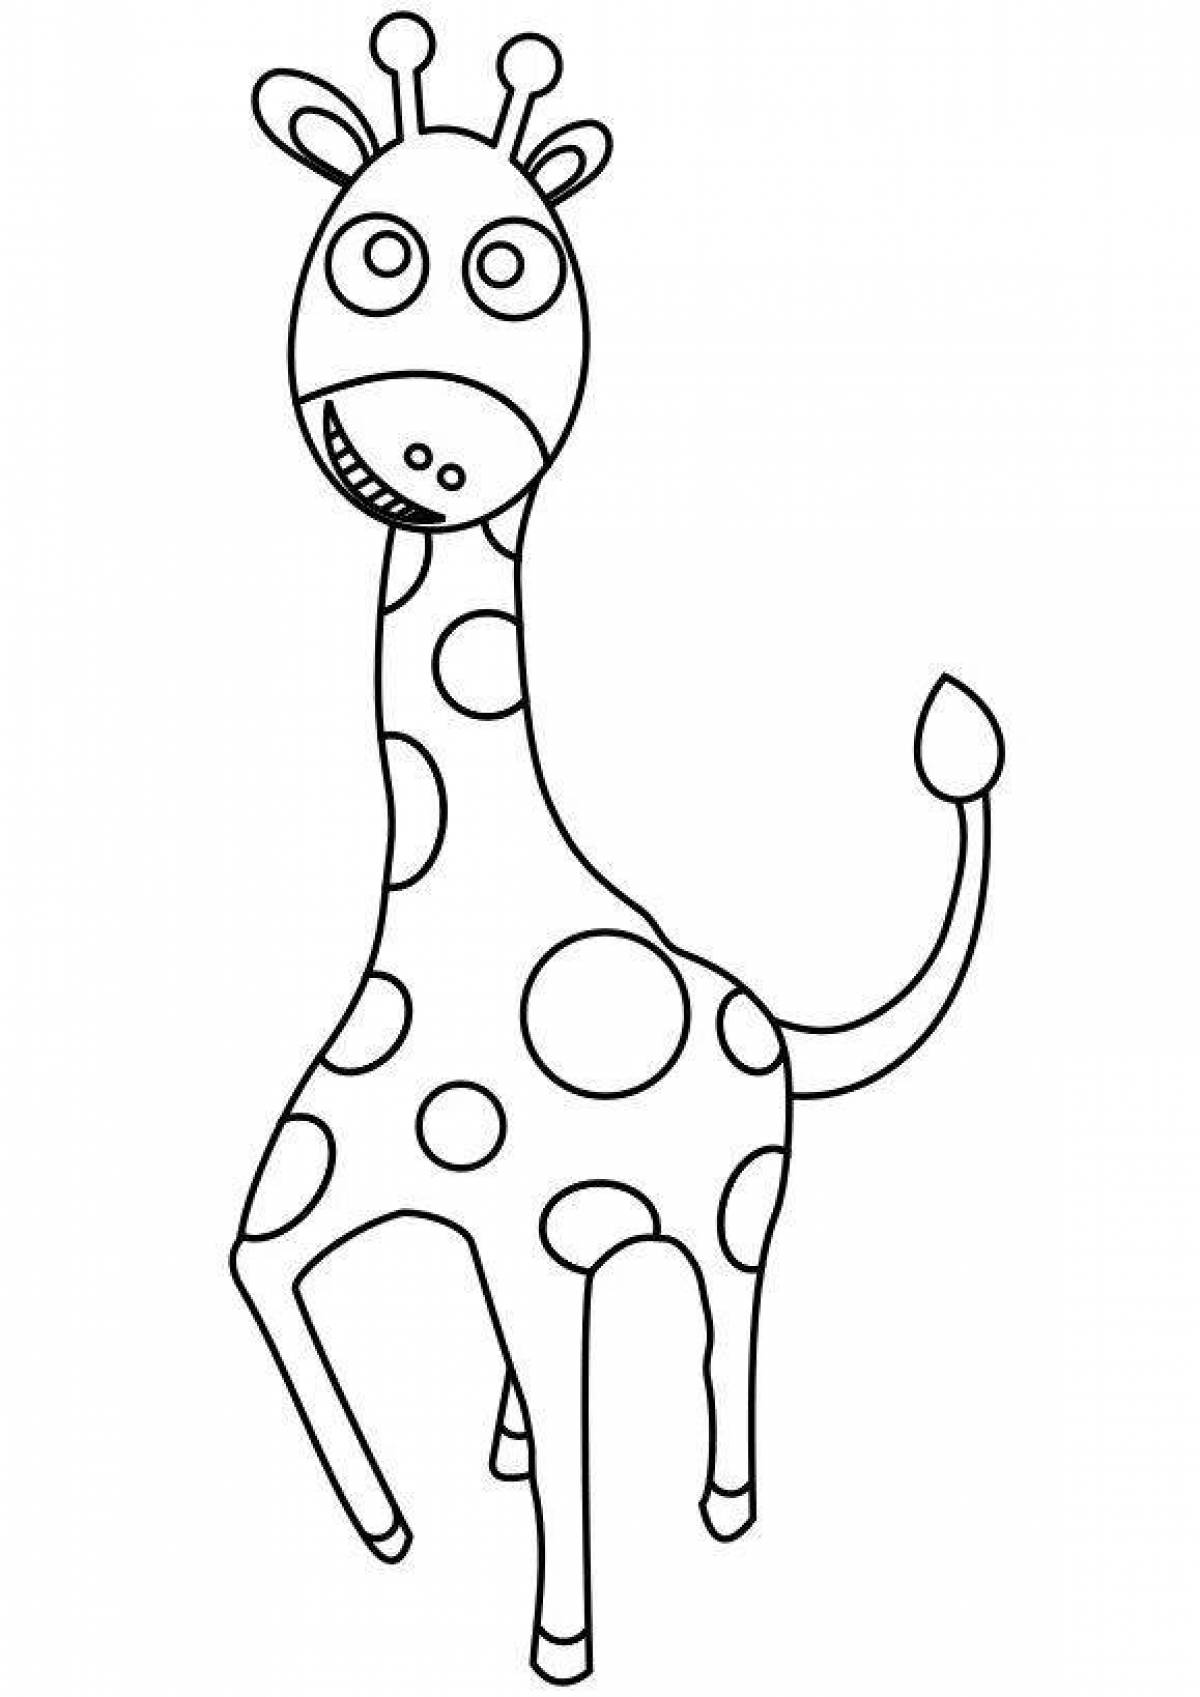 Шаблон жирафа для рисования для детей